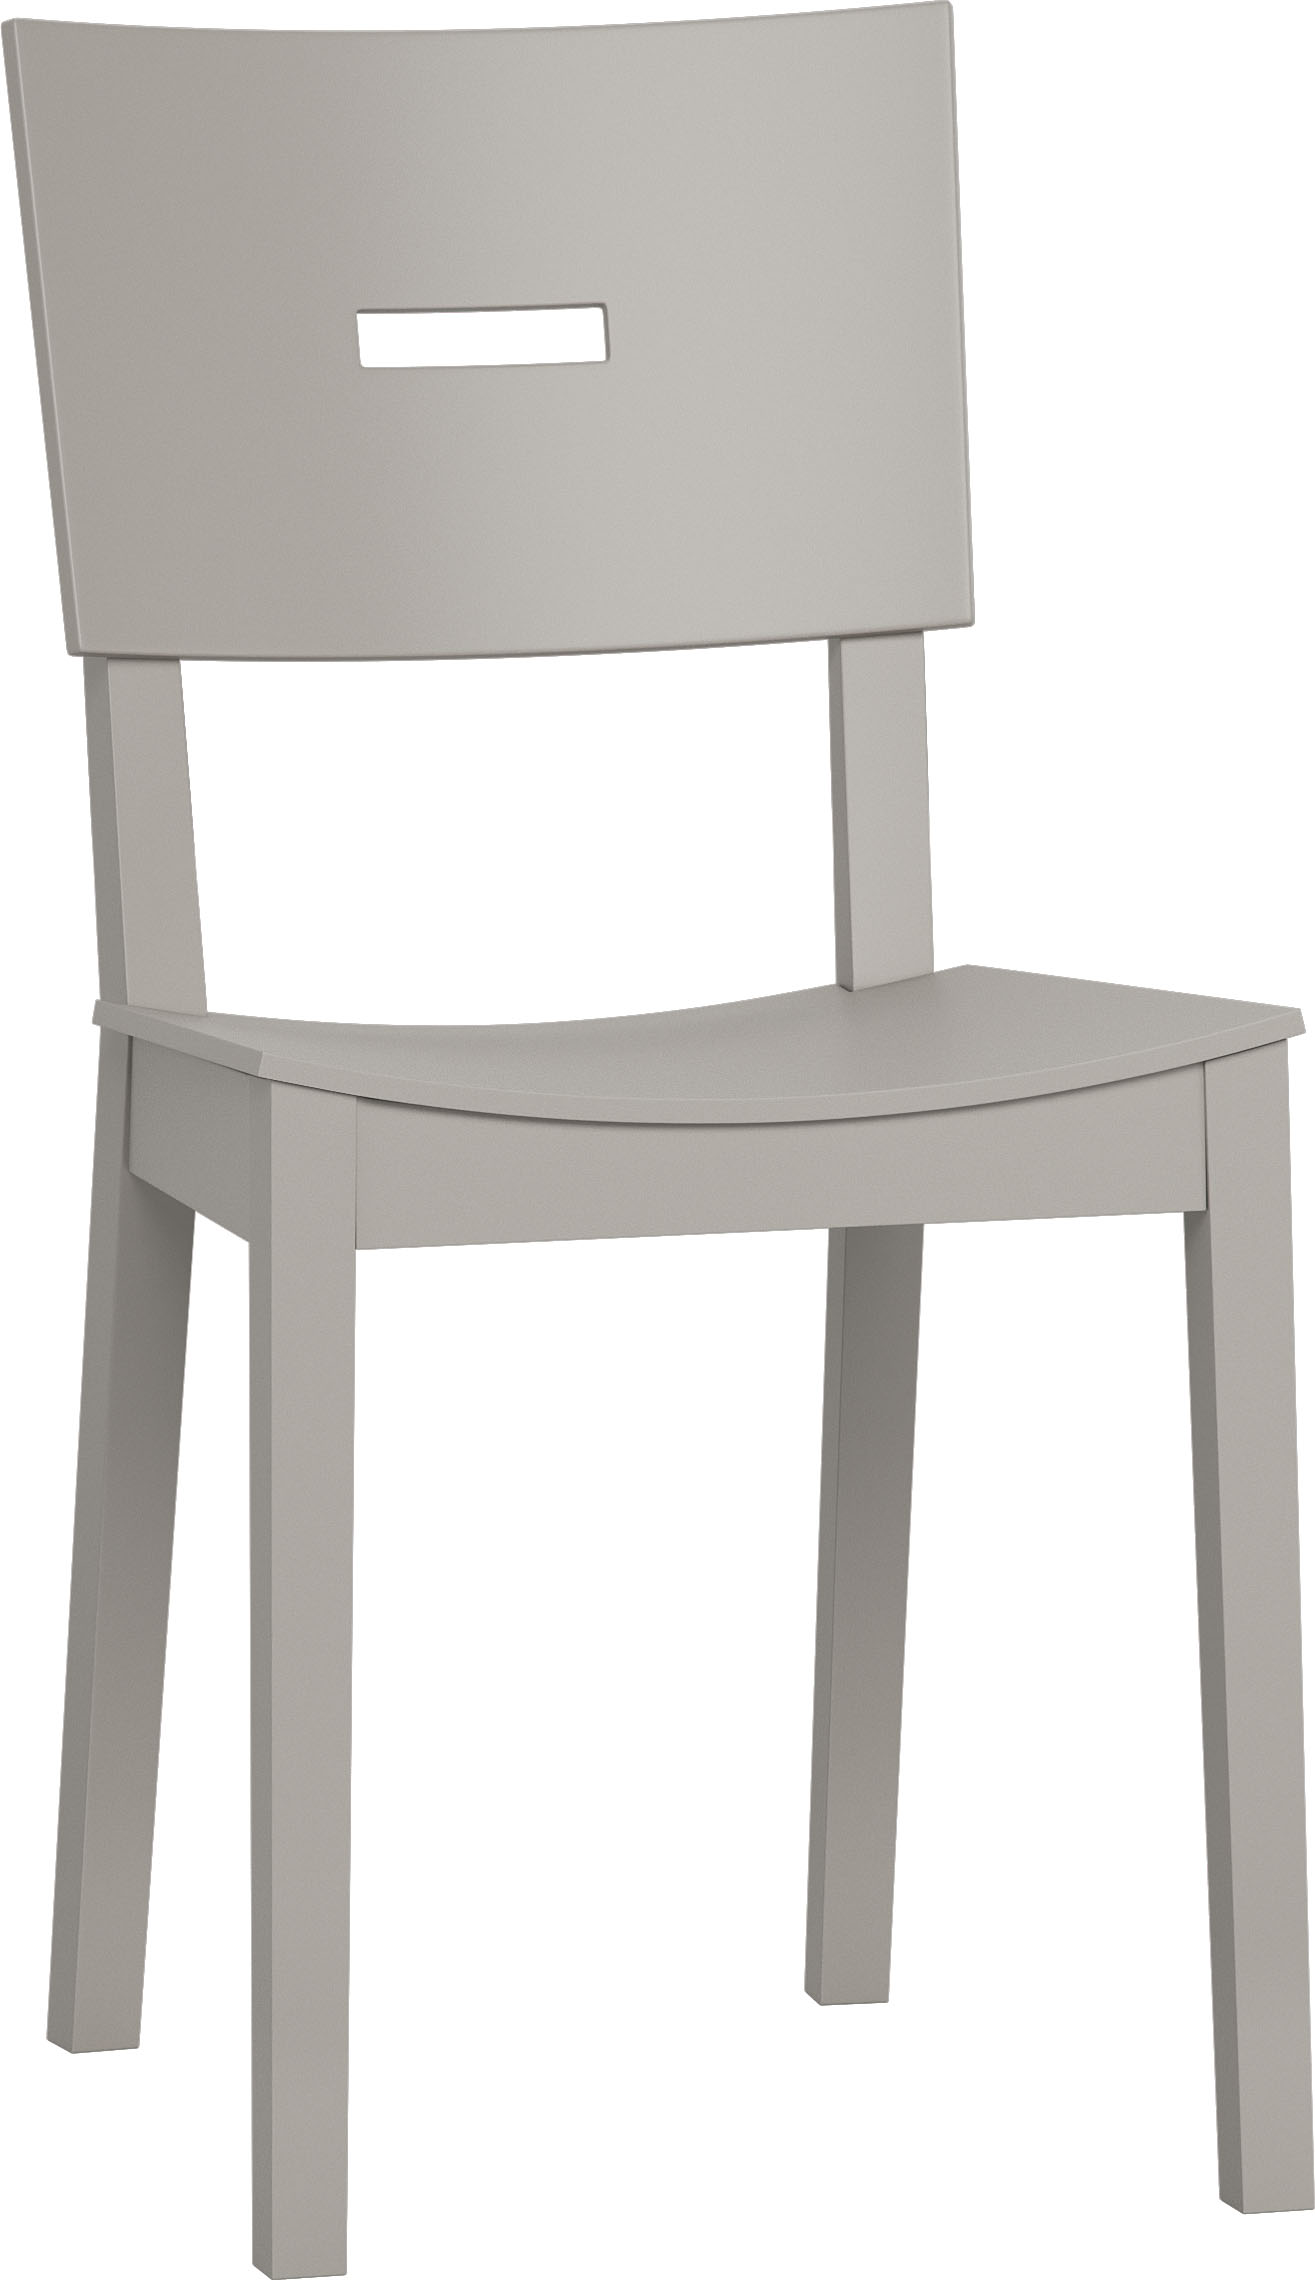 Chair Simple grey